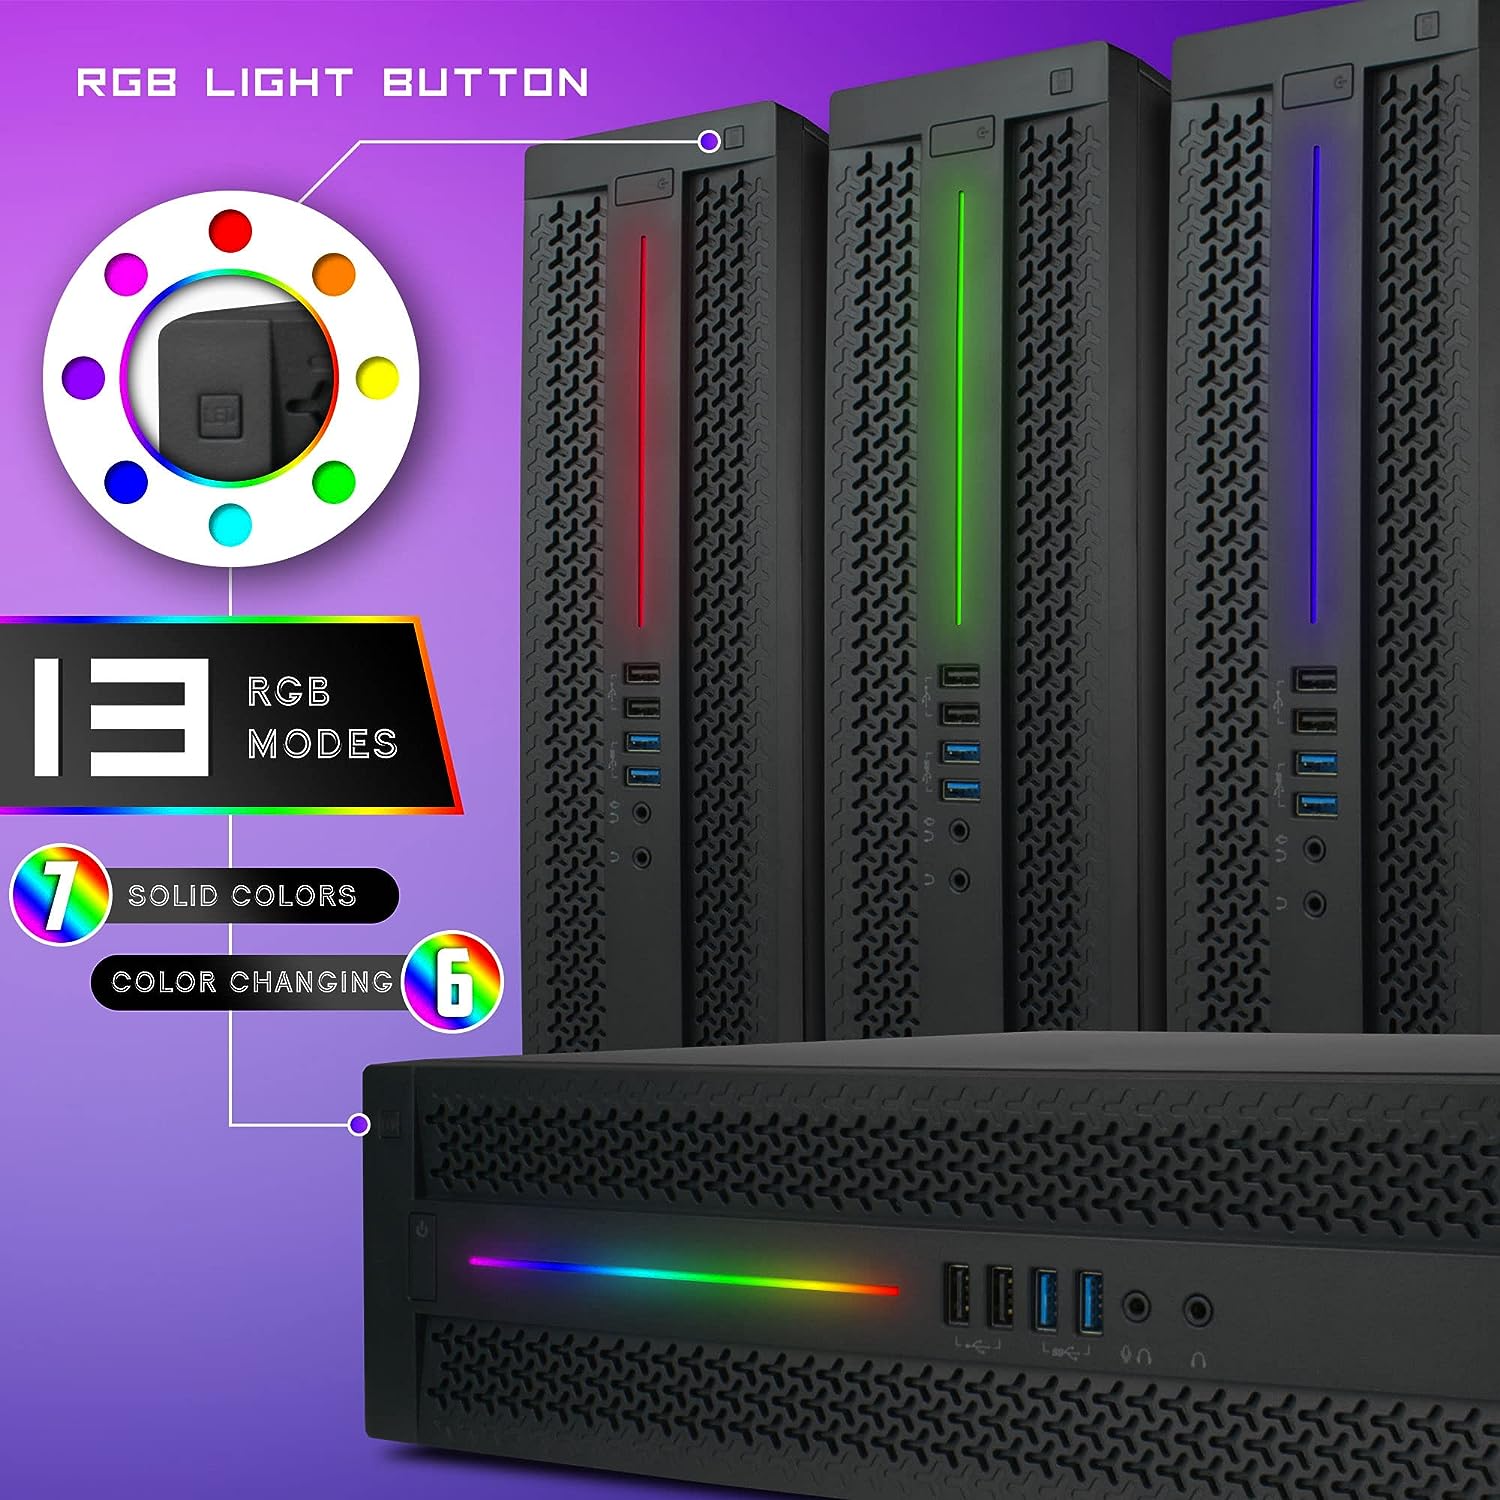 Periphio Iris Gaming PC Desktop Computer w/RGB Lighting | Intel Core i5-4690 3.9Ghz Turbo | GT 730 (2GB) | 8GB RAM | 500GB SSD |